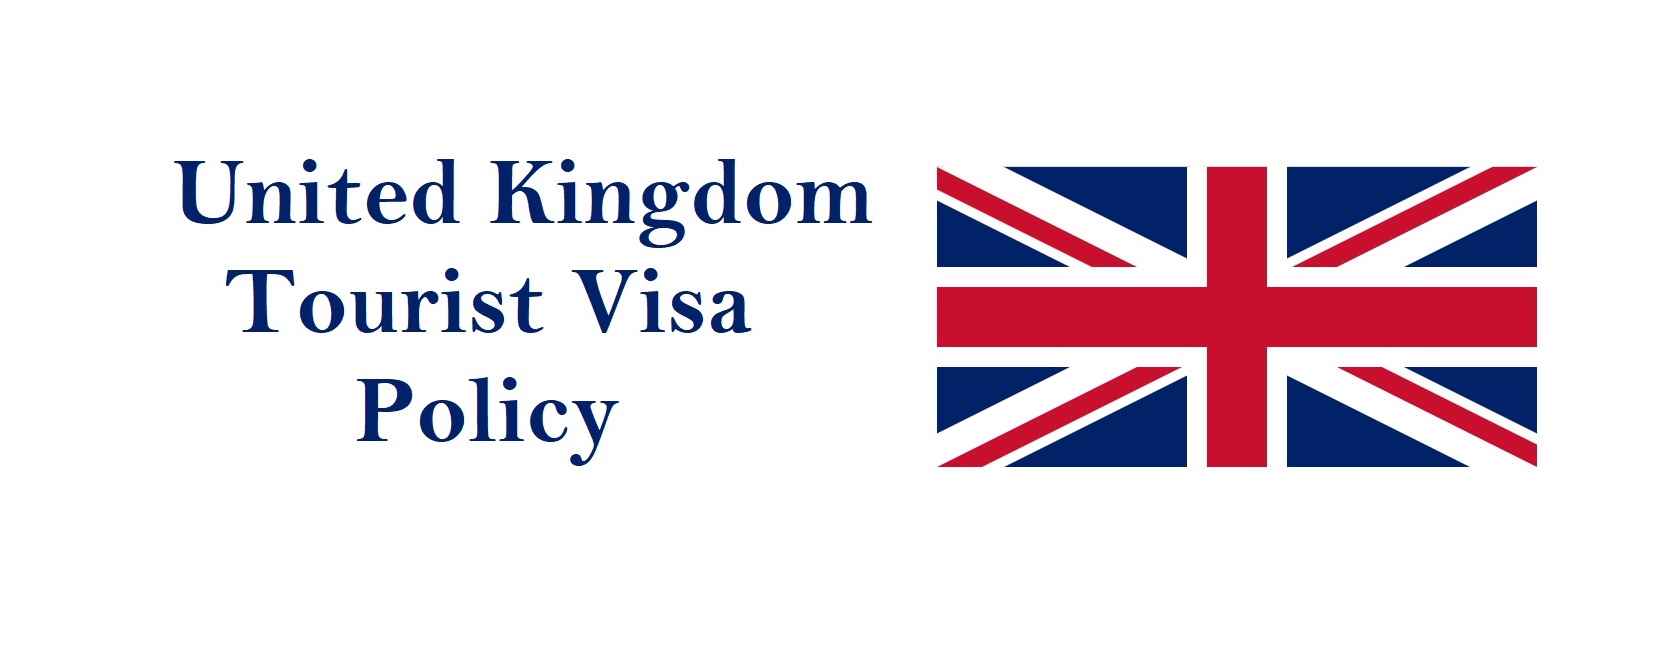 United Kingdom Tourist Visa Policy